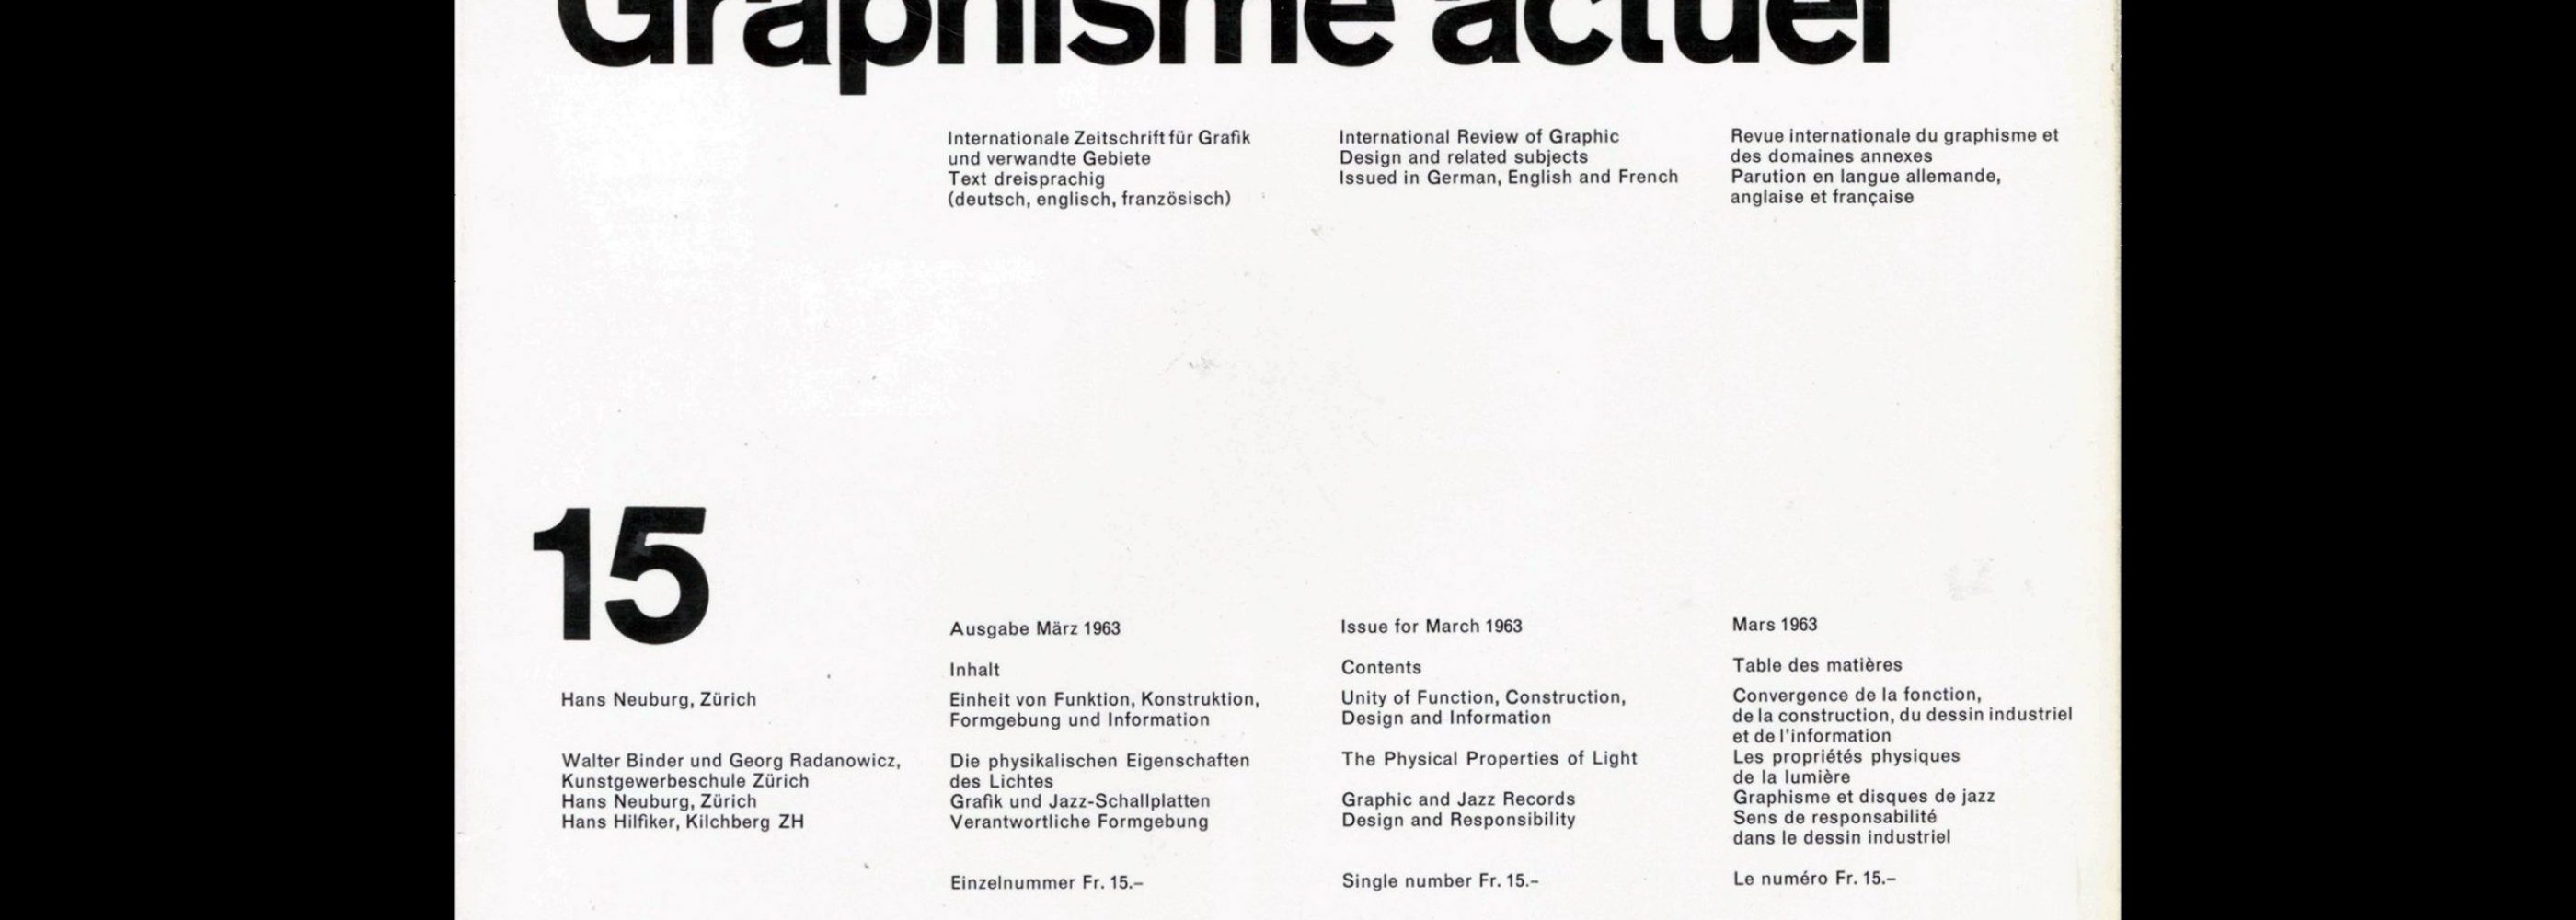 Neue Grafik / New Graphic Design / Graphisme actuel - No.15, 1963. Josef Müller-Brockmann, Hans Neuburg, Richard Paul Lohse, and Carlo Vivarelli